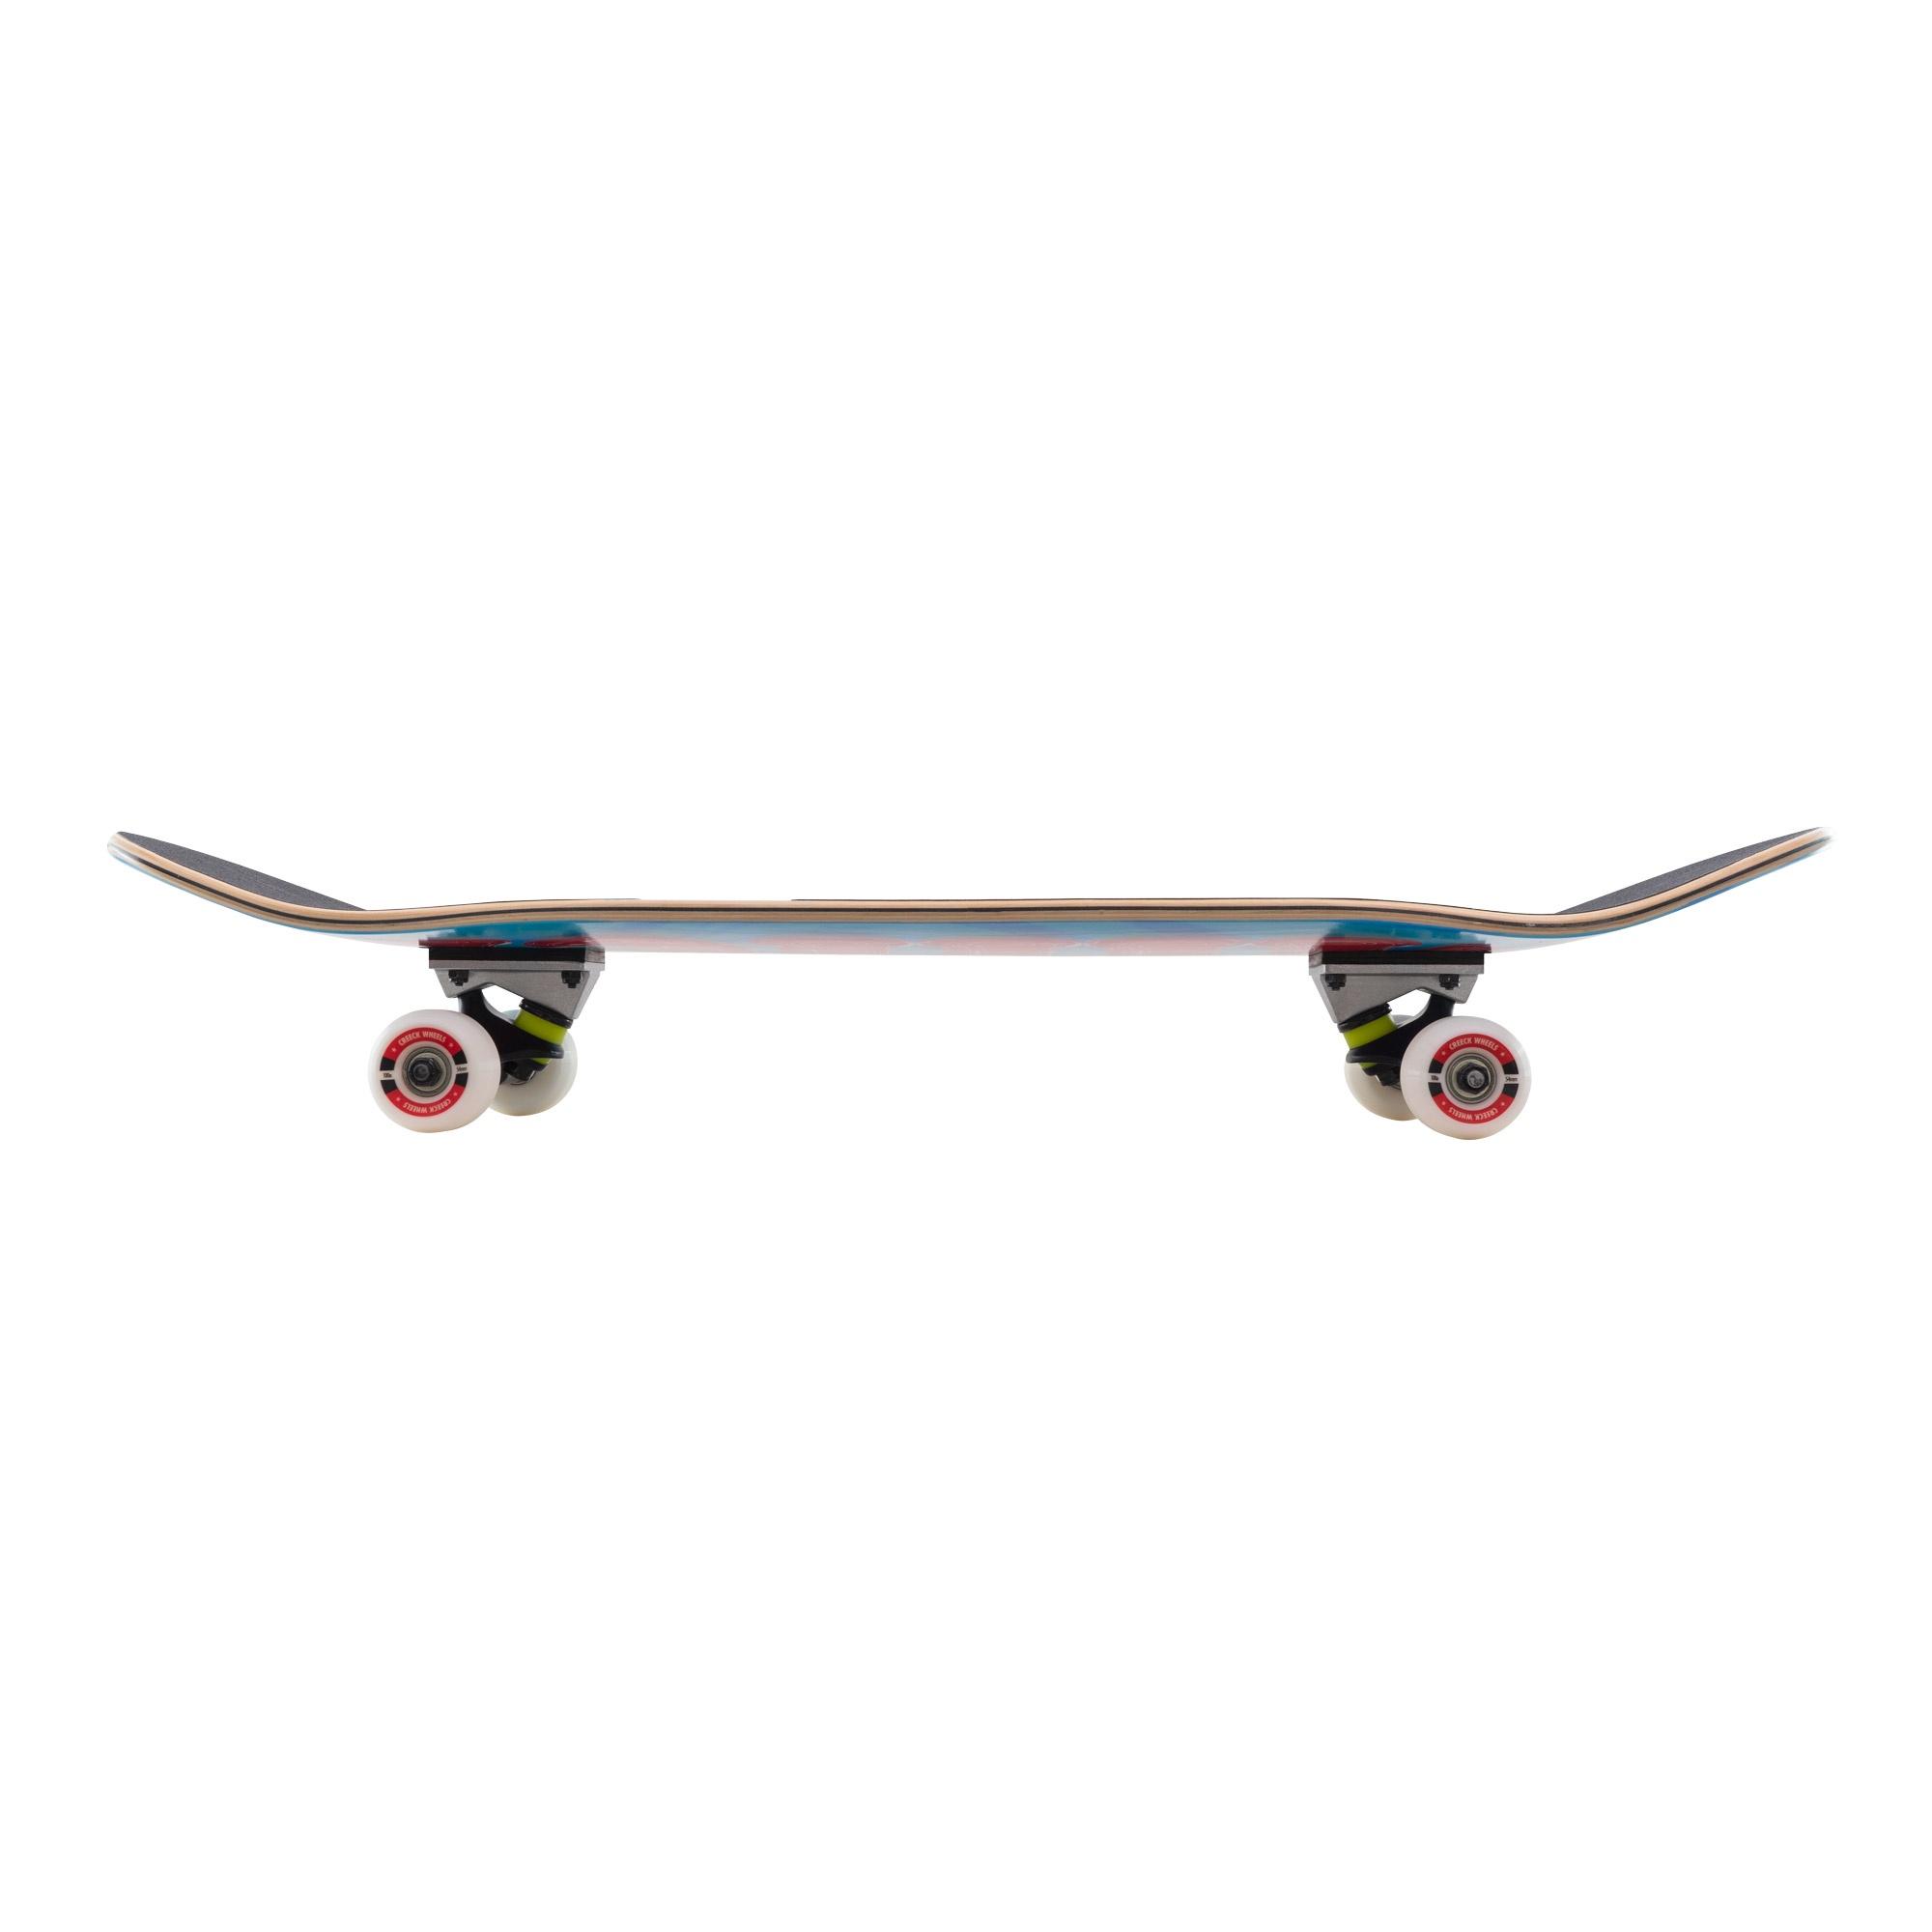 Skateboard Completo Miller Party Bordo 31,75"x8" Abec7 Rodas Creek Shr53mm